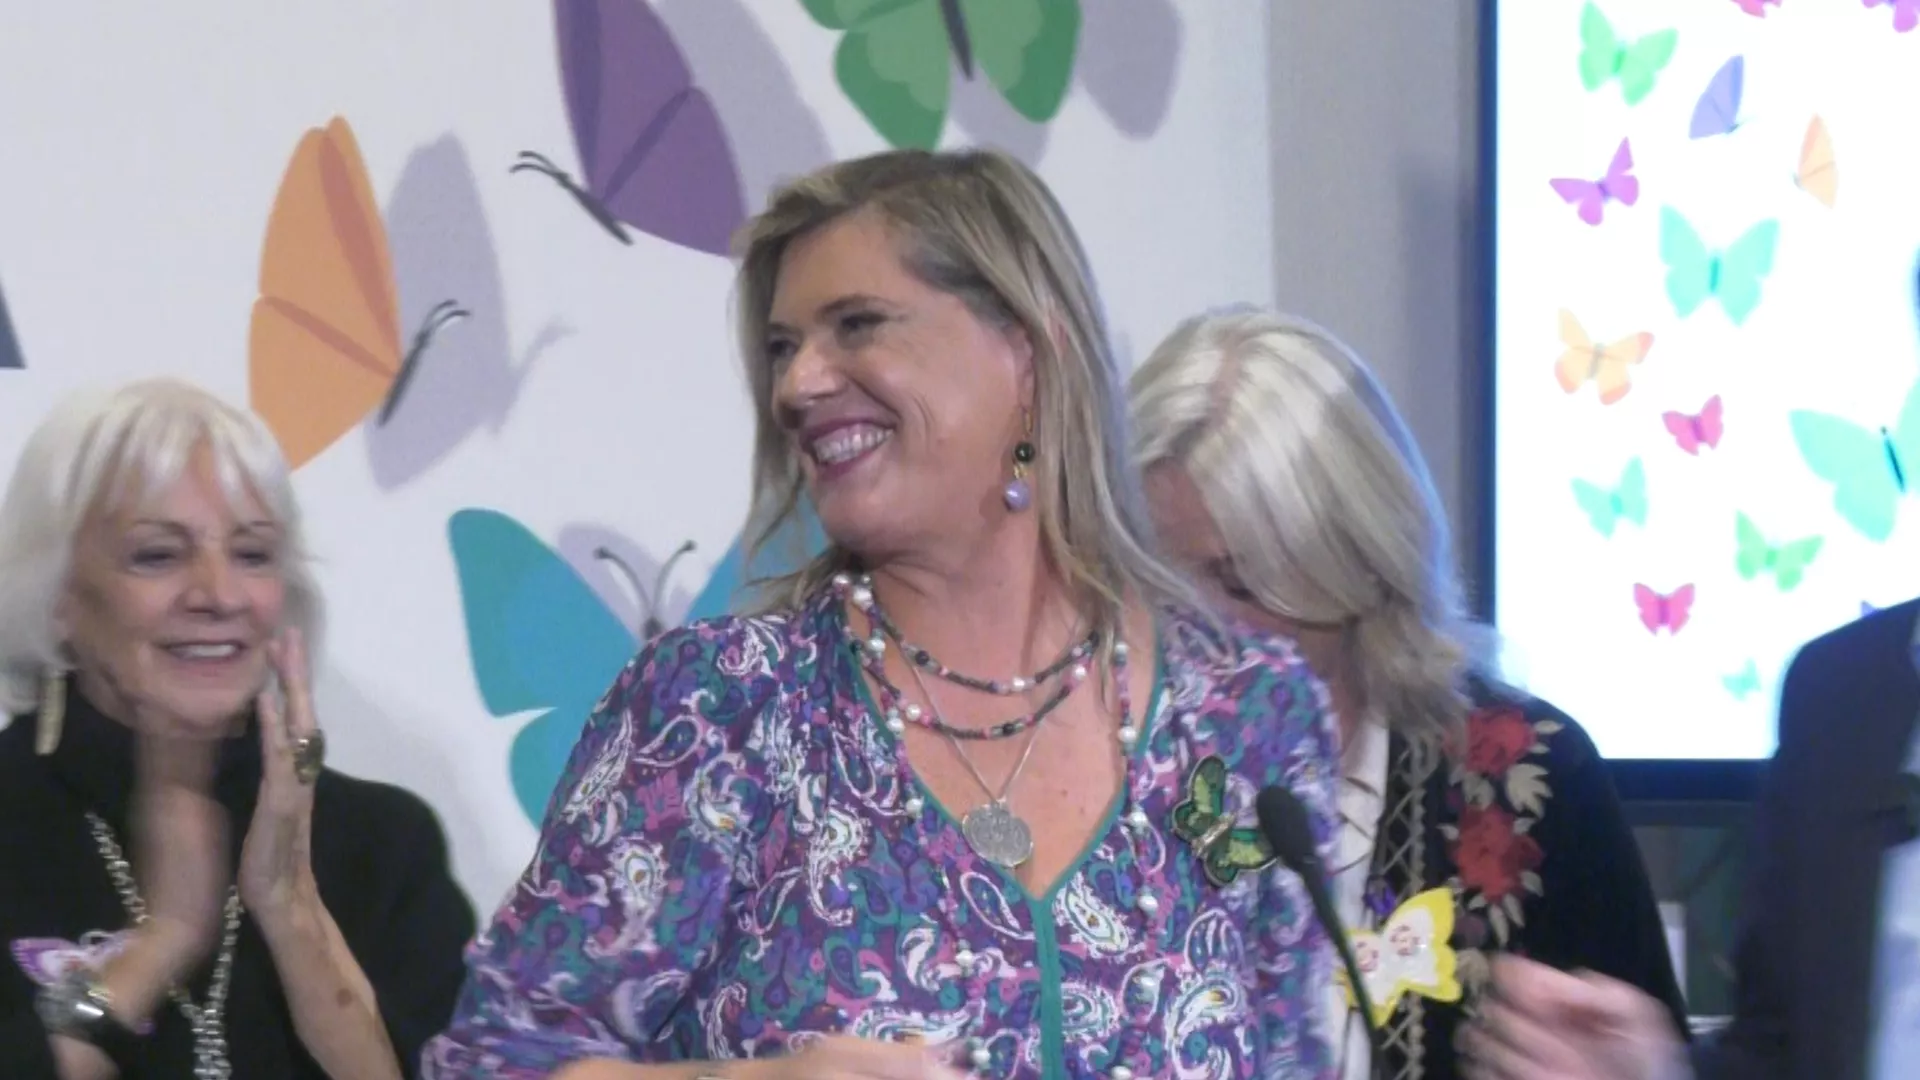 Lola Palomino galardonada con el IX Premio Mariposa "hermanas Mirabal"